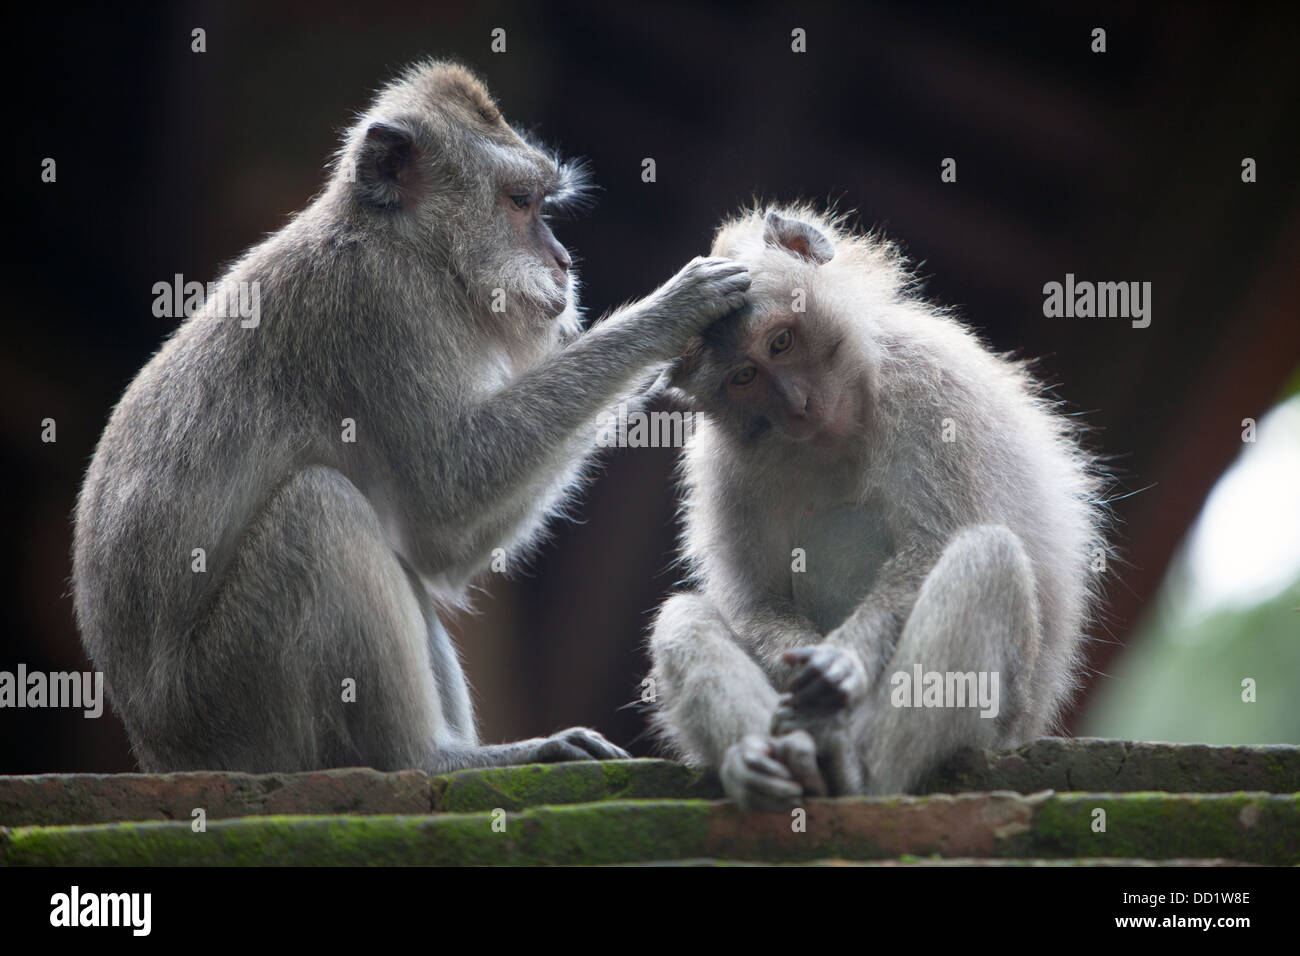 Temple Monkey Forest, Ubud, Bali, Indonésie Banque D'Images